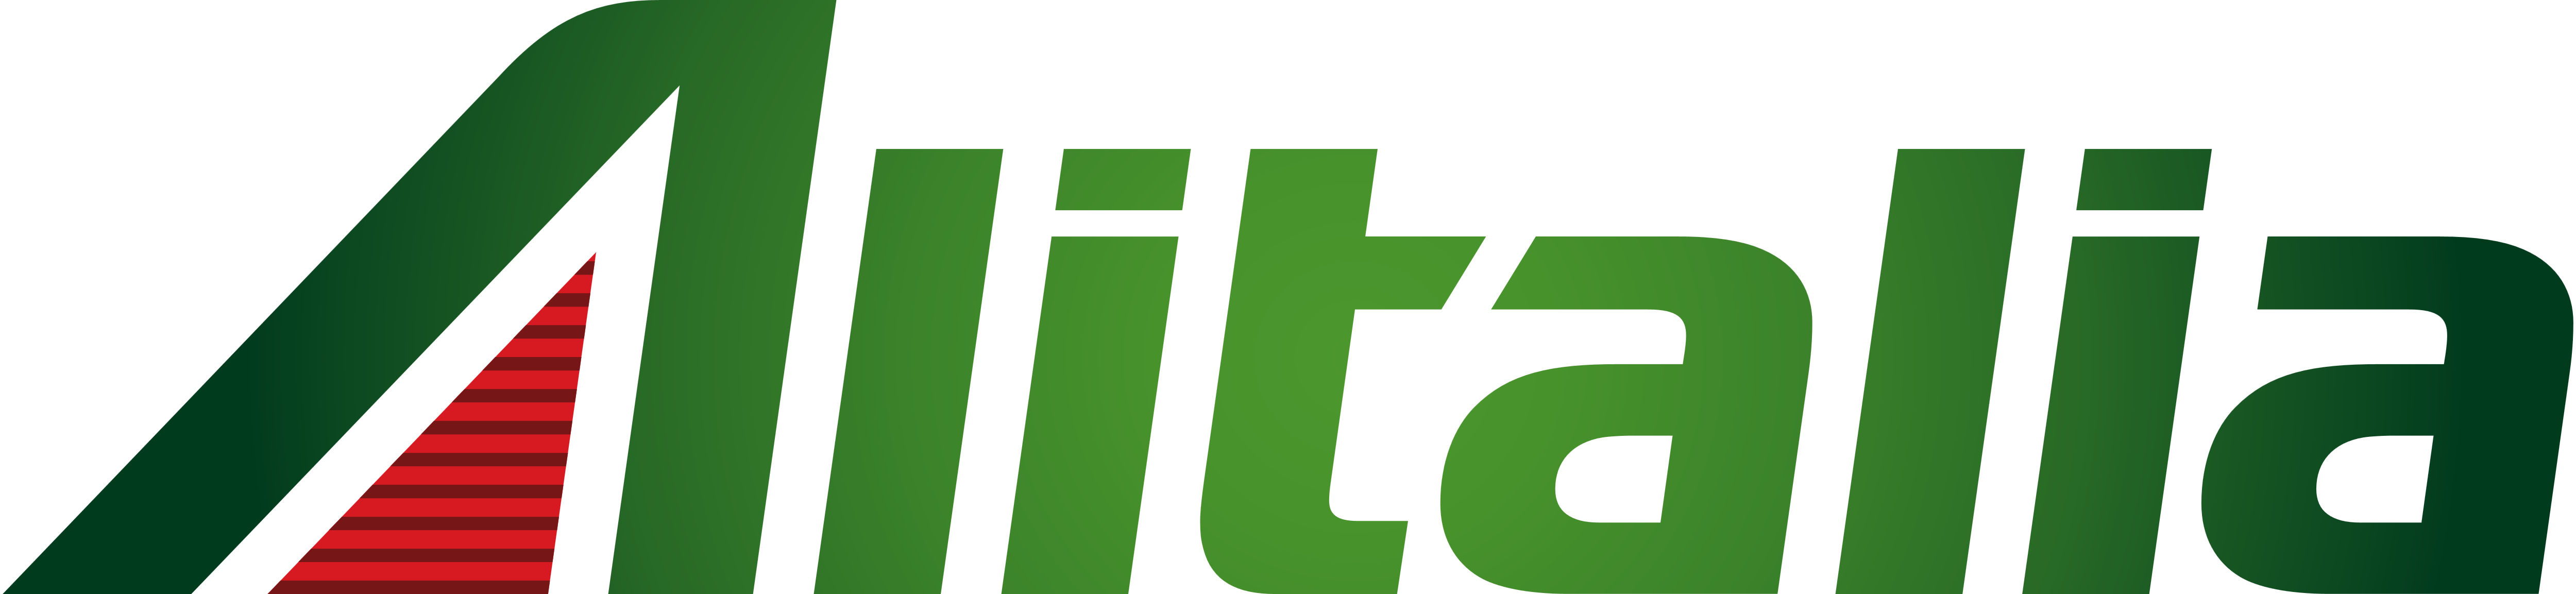 Resultado de imagen para alitalia logo